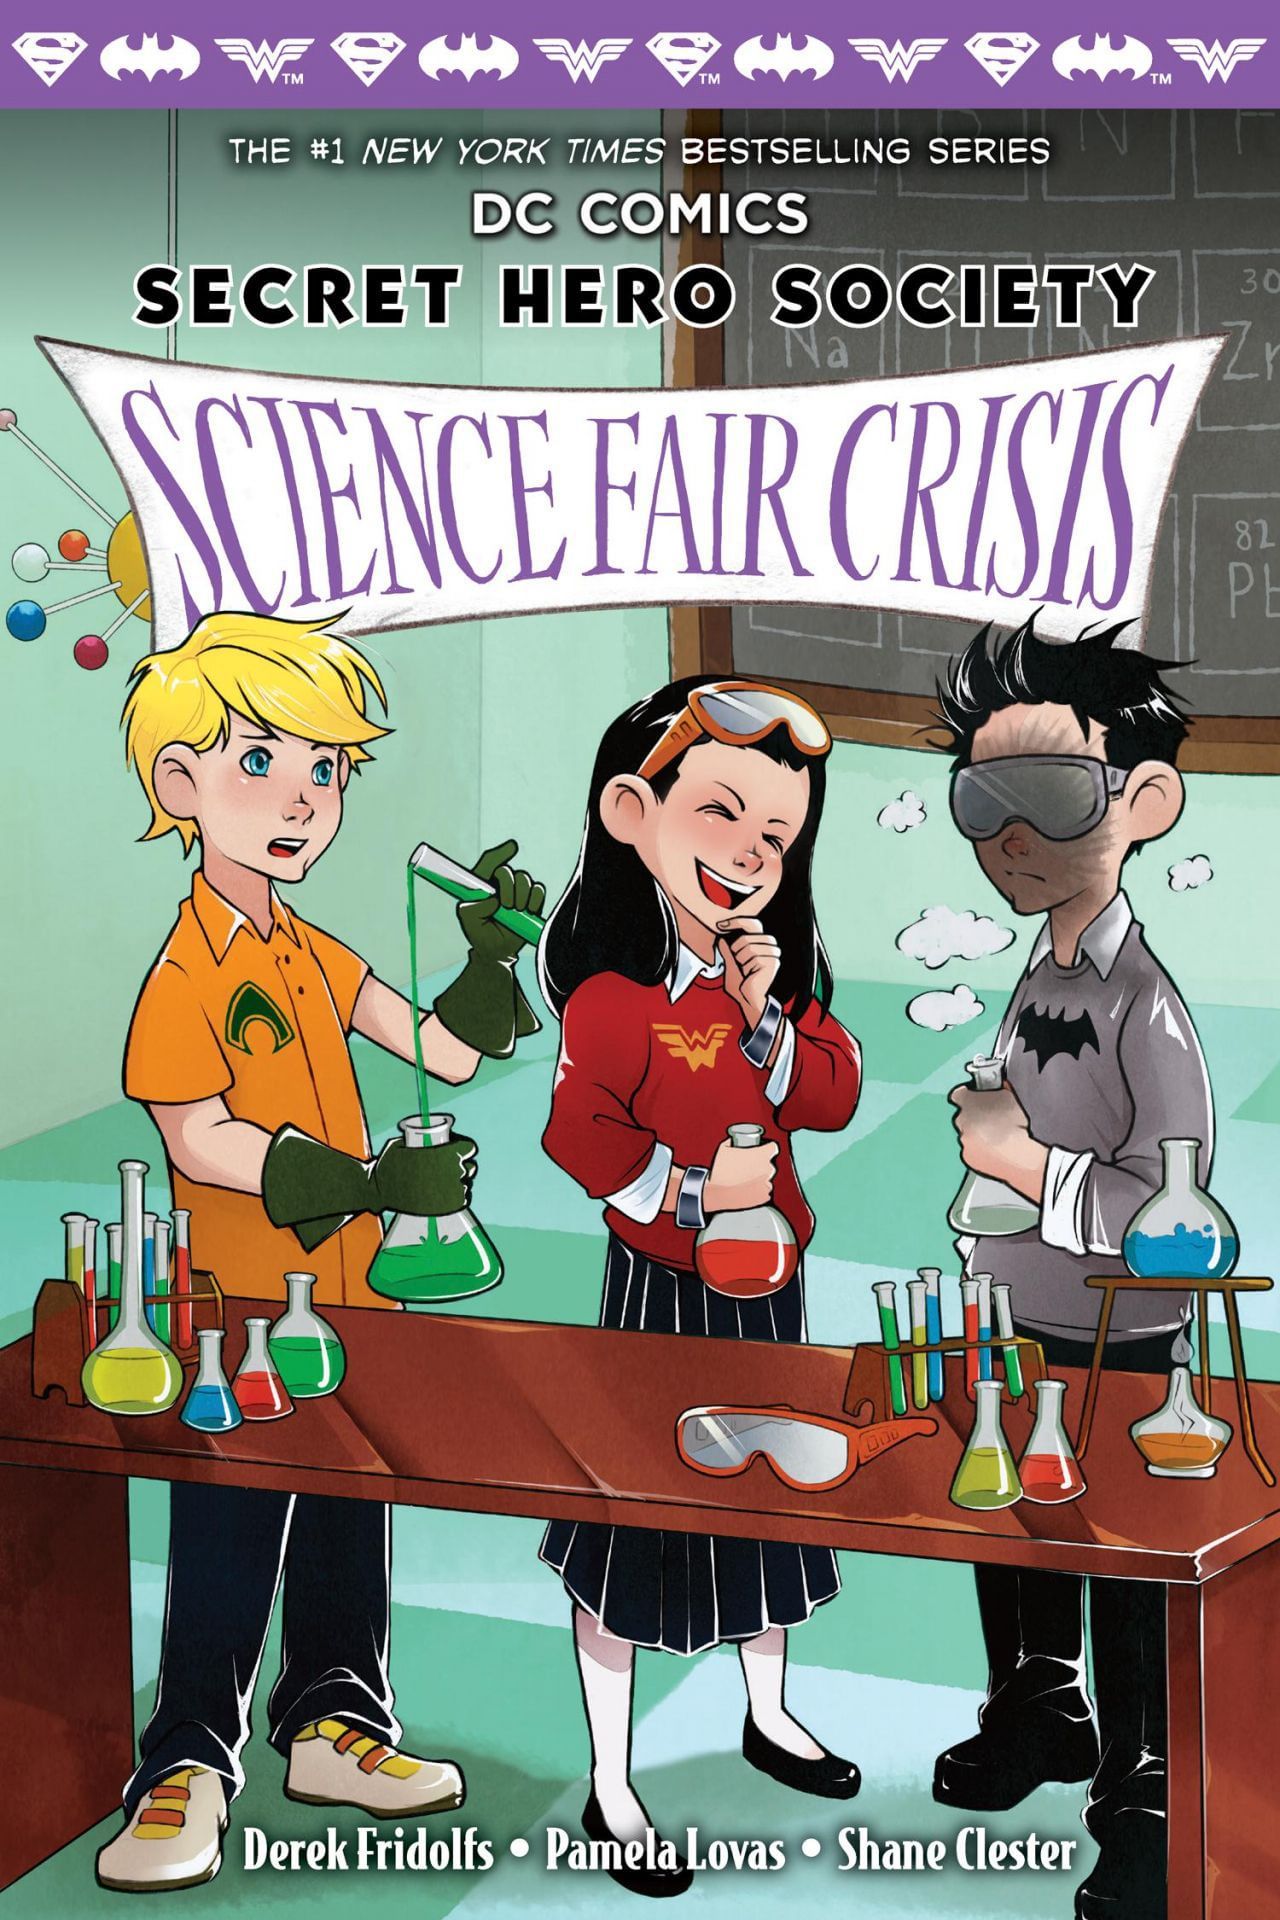 DC Comics: Secret Hero Society - Science Fair Crisis (2019): Chapter 1 - Page 1